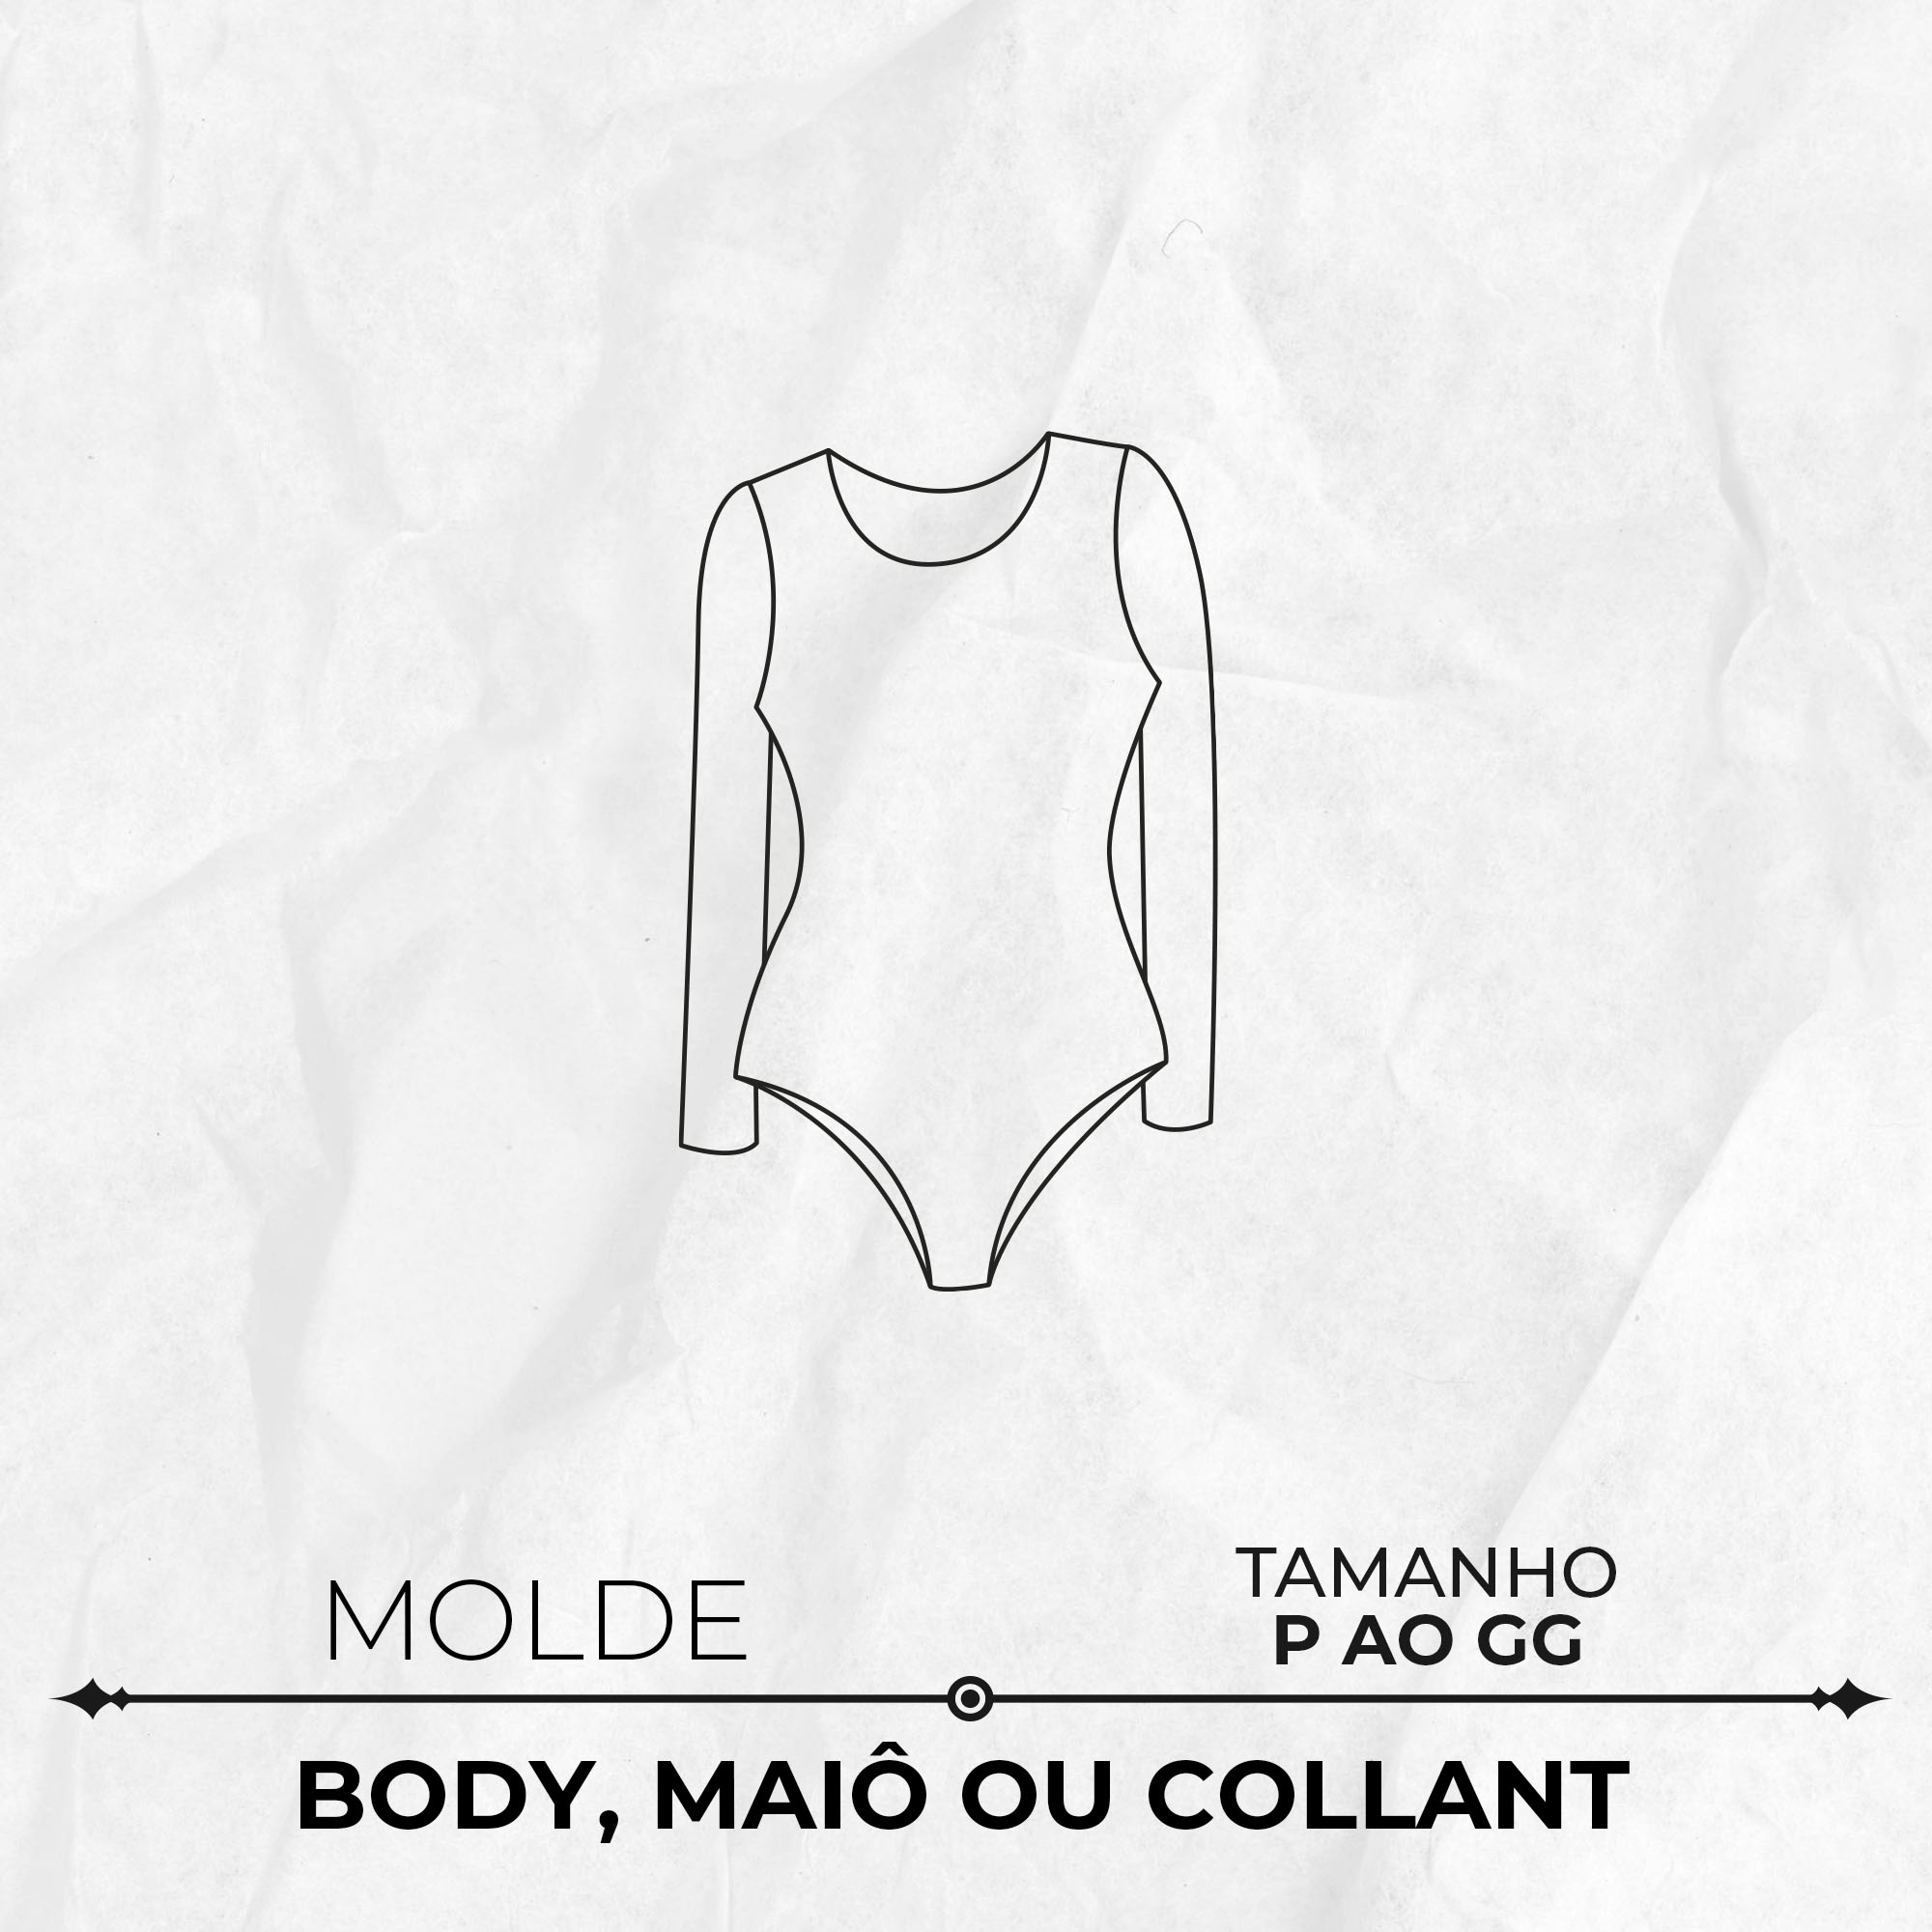 Molde body, maiô ou collant by Marlene Mukai